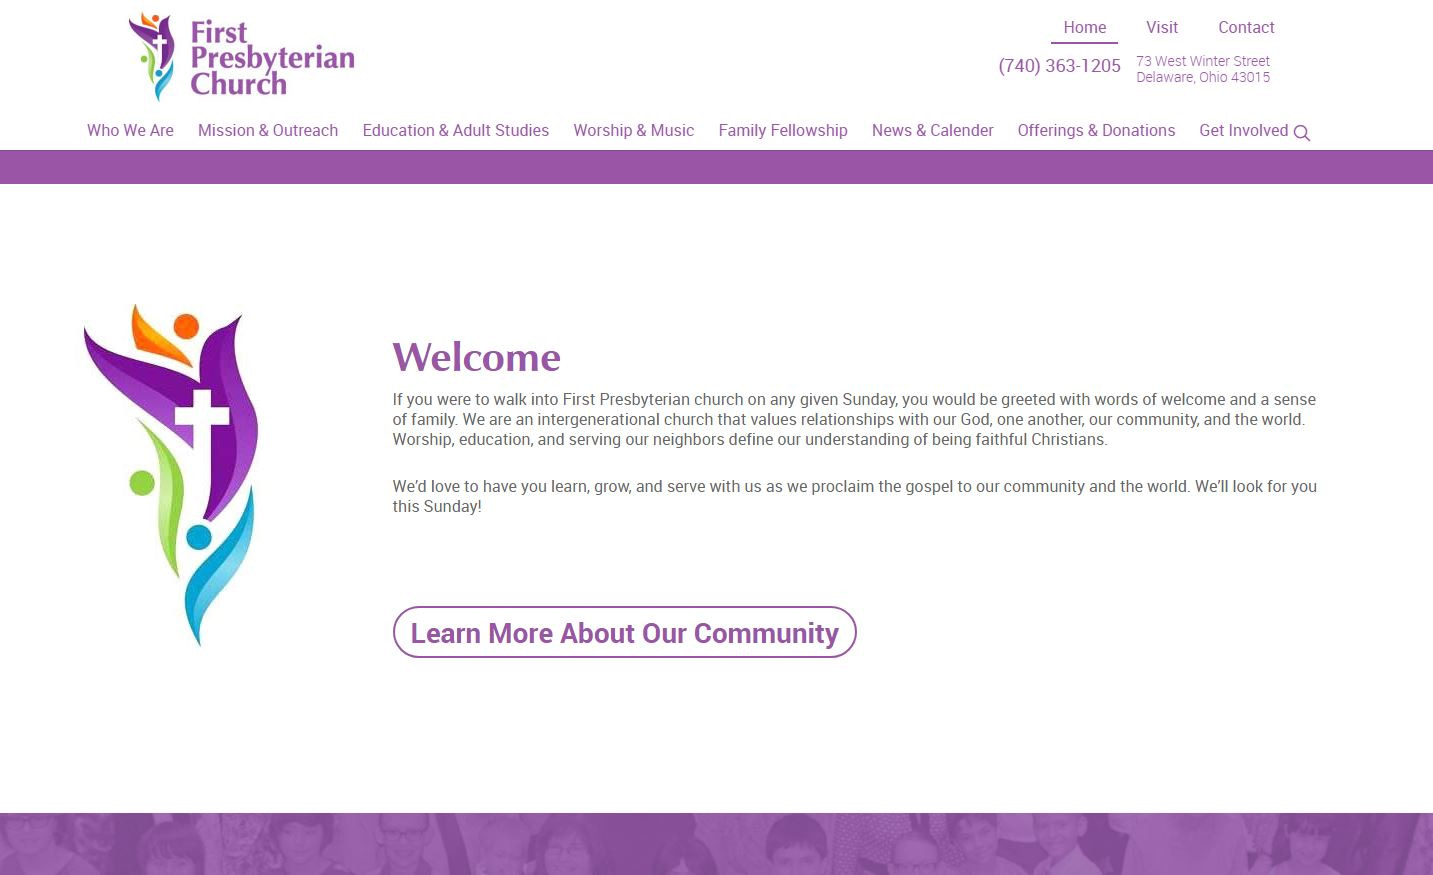 First Presbyterian Church Website Homepage